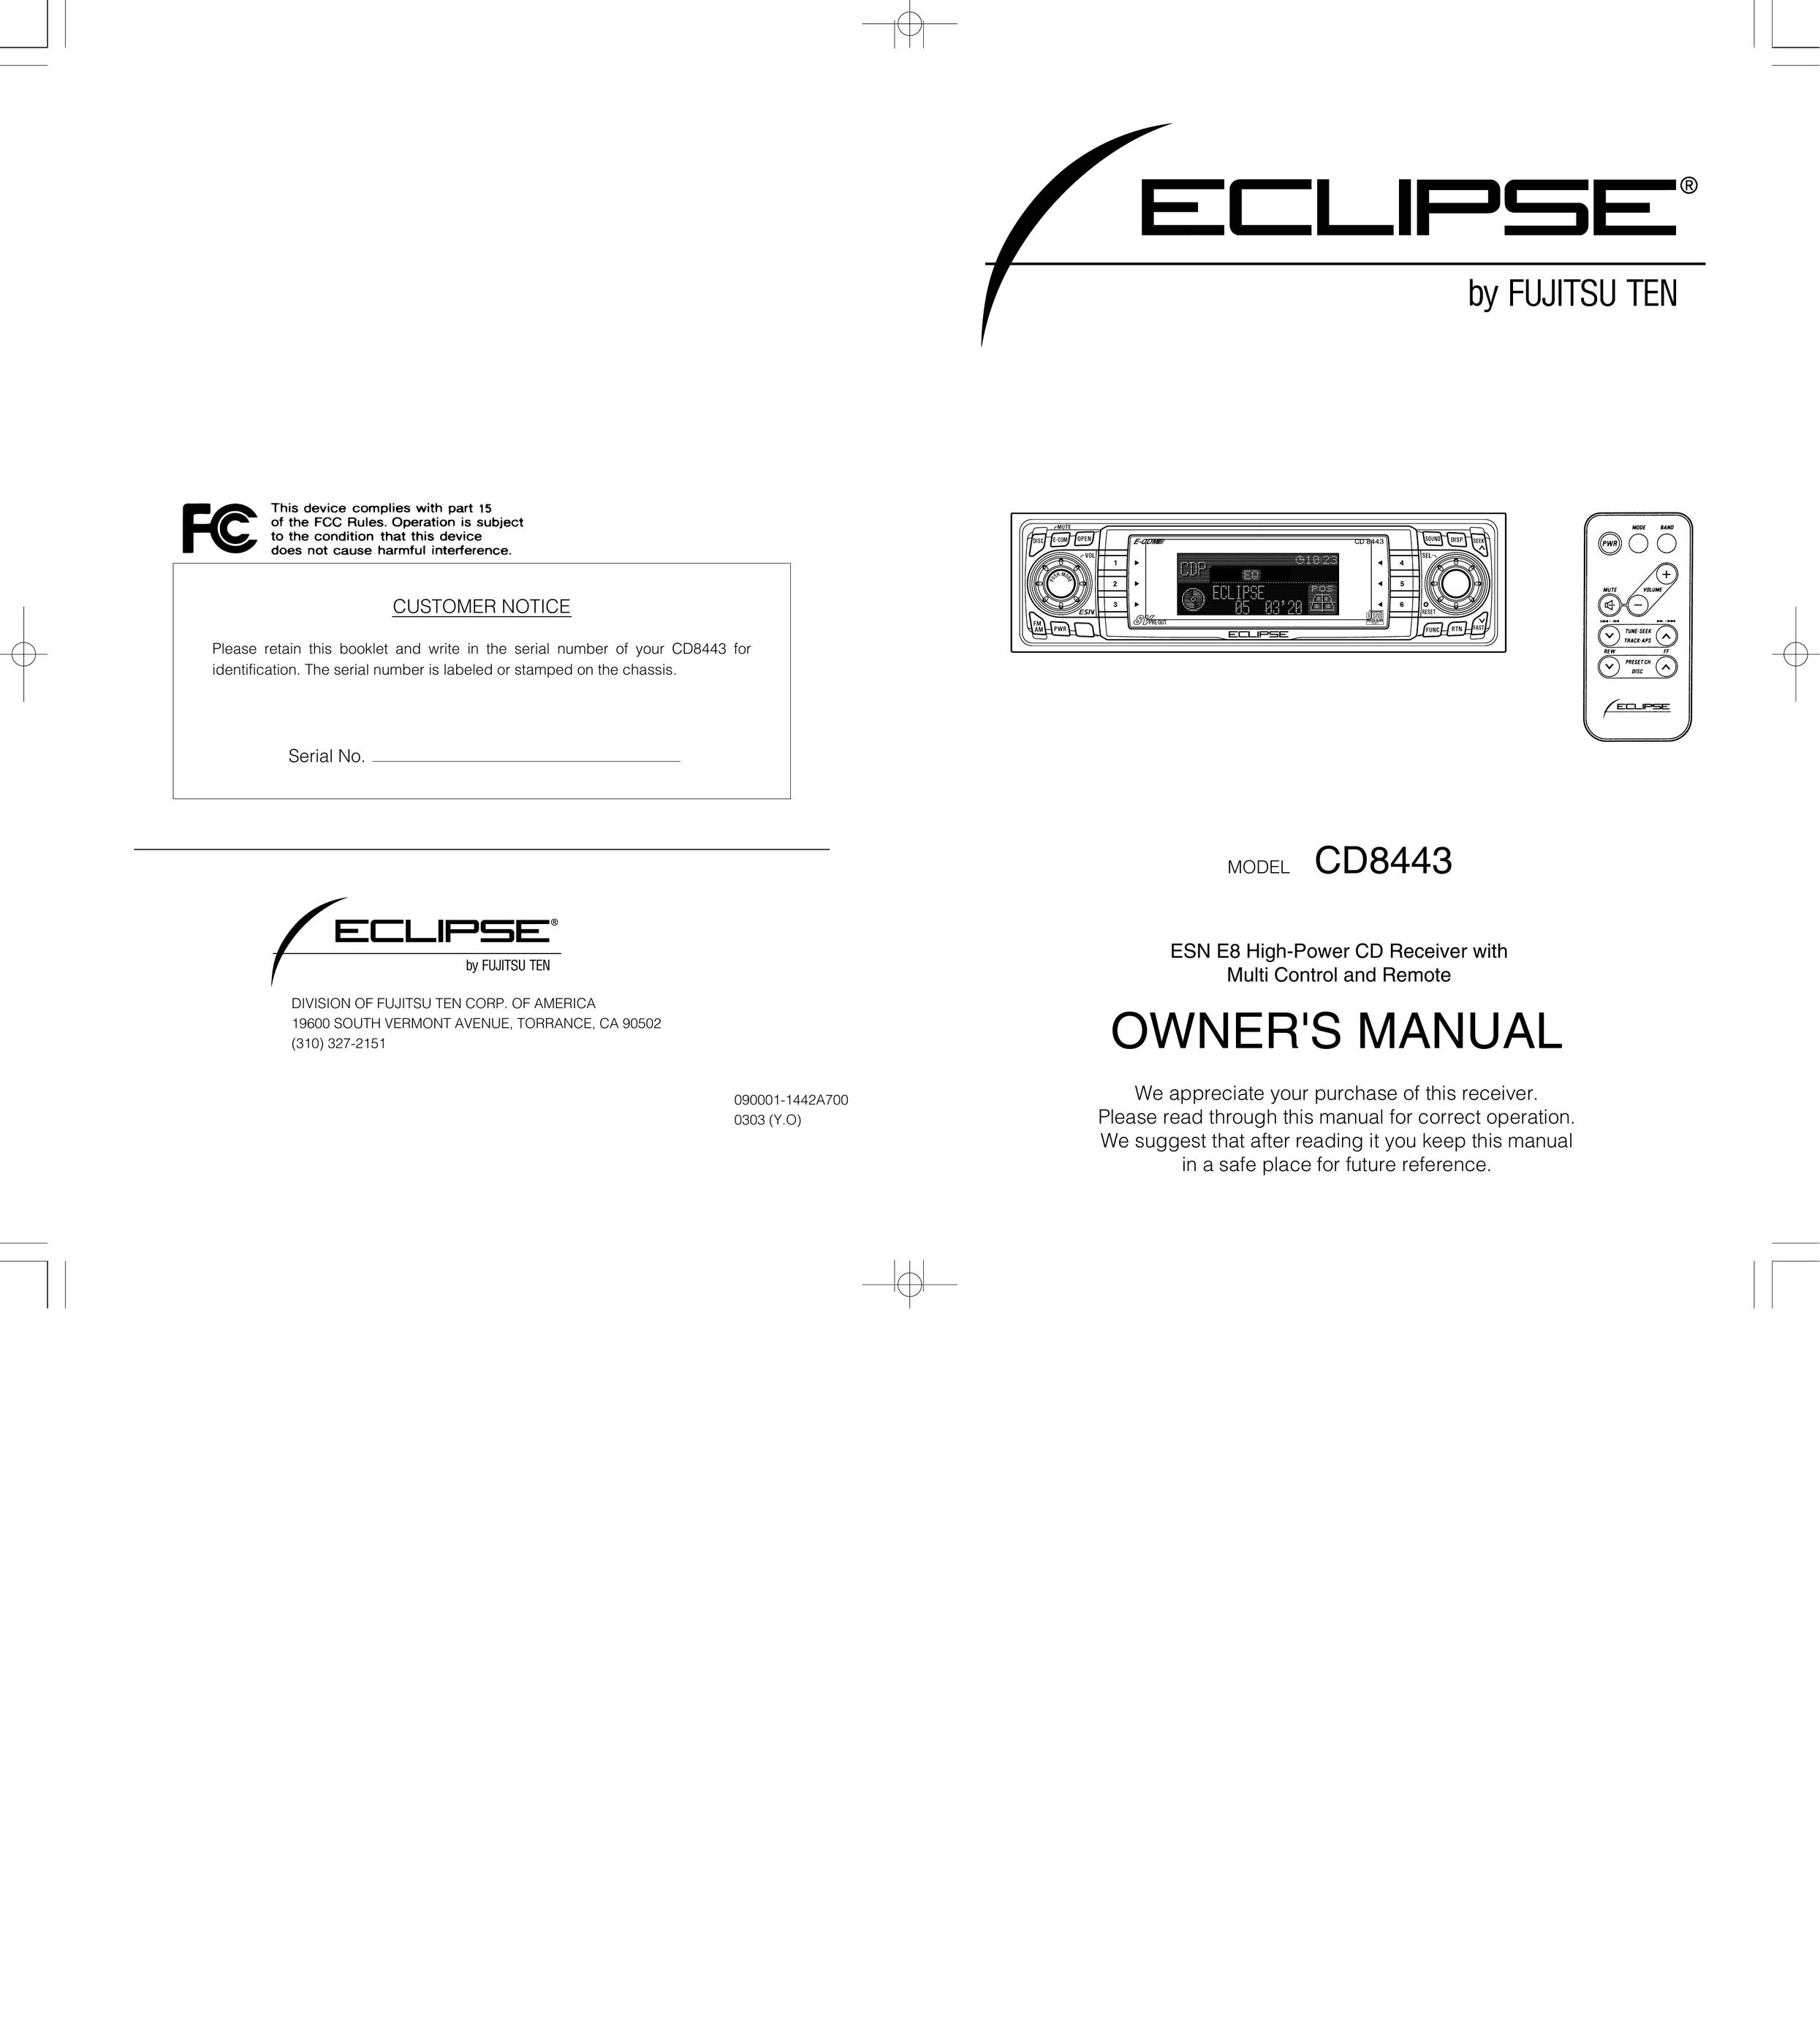 Eclipse - Fujitsu Ten CD8443 Car Satellite Radio System User Manual